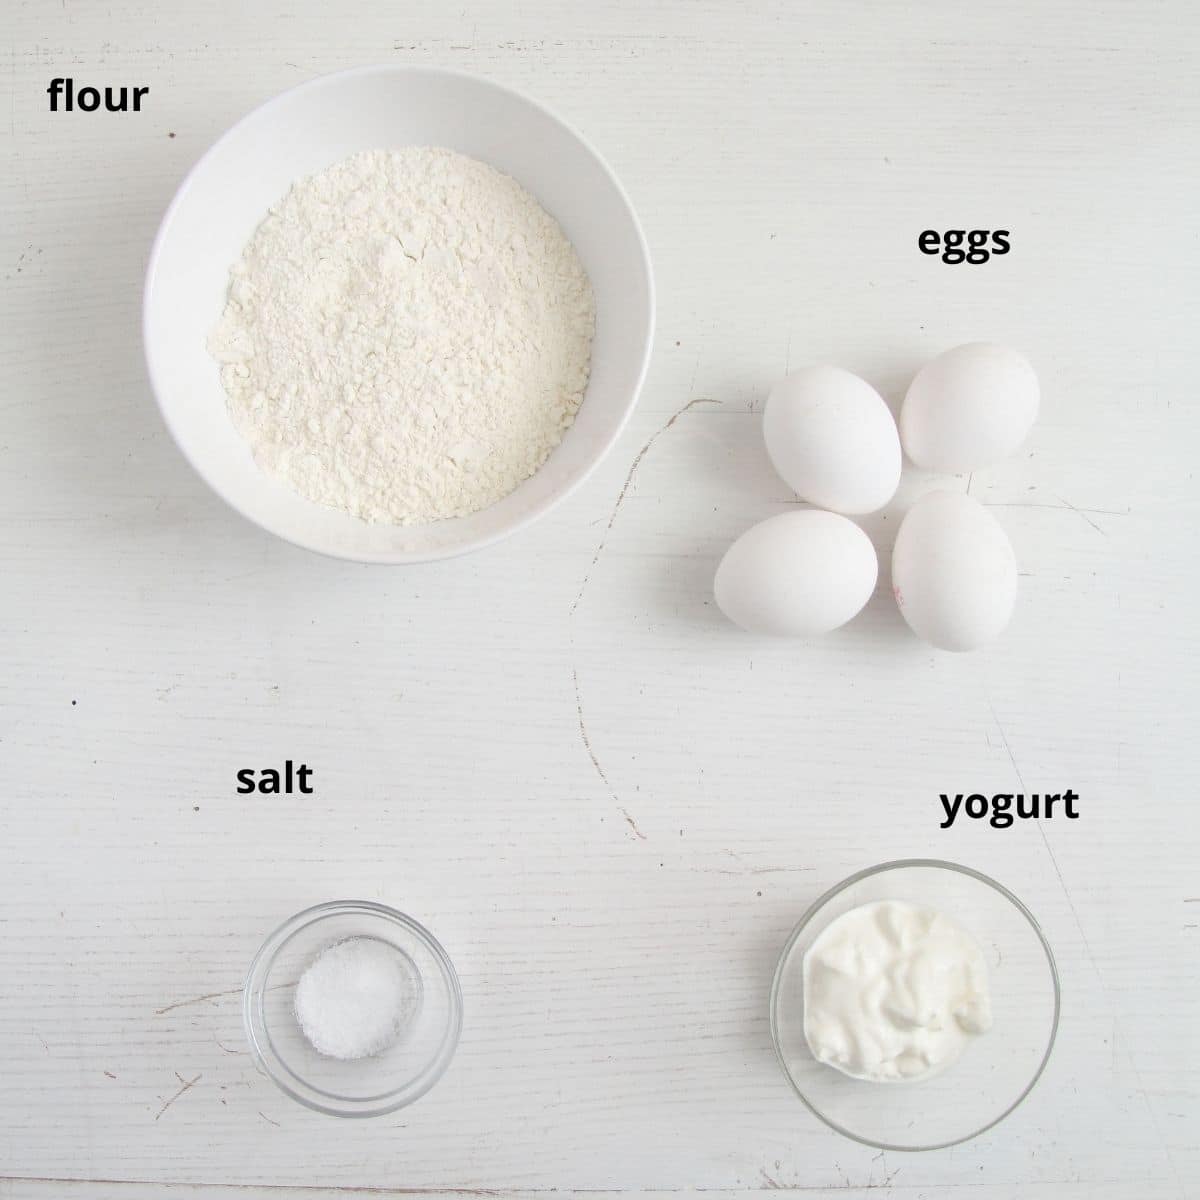 flour, eggs, salt, yogurt on the table.